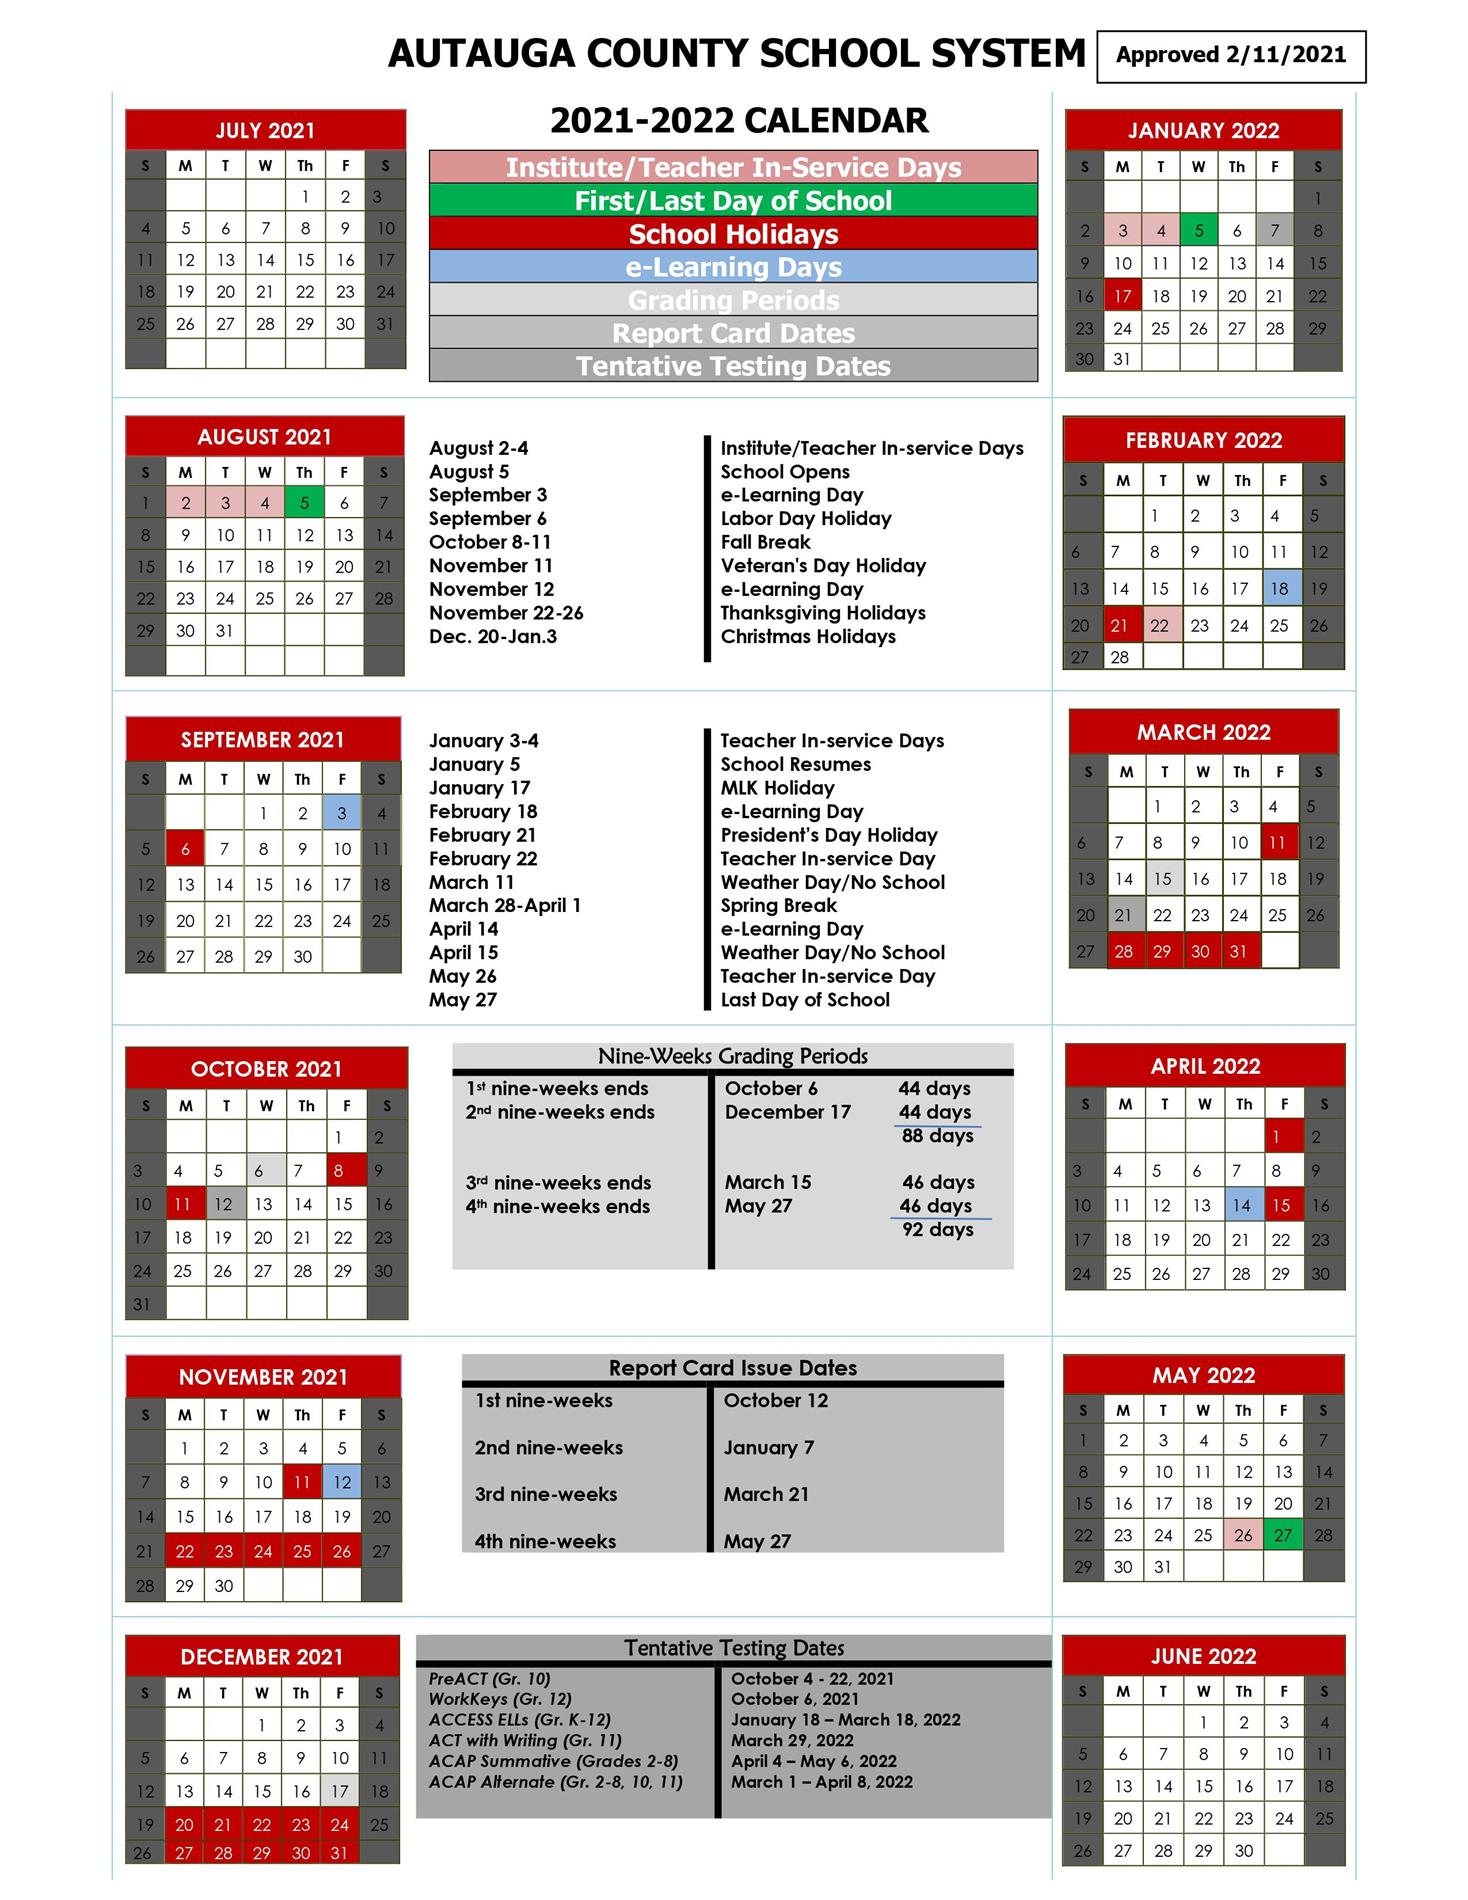 2021-2022 updated calendar